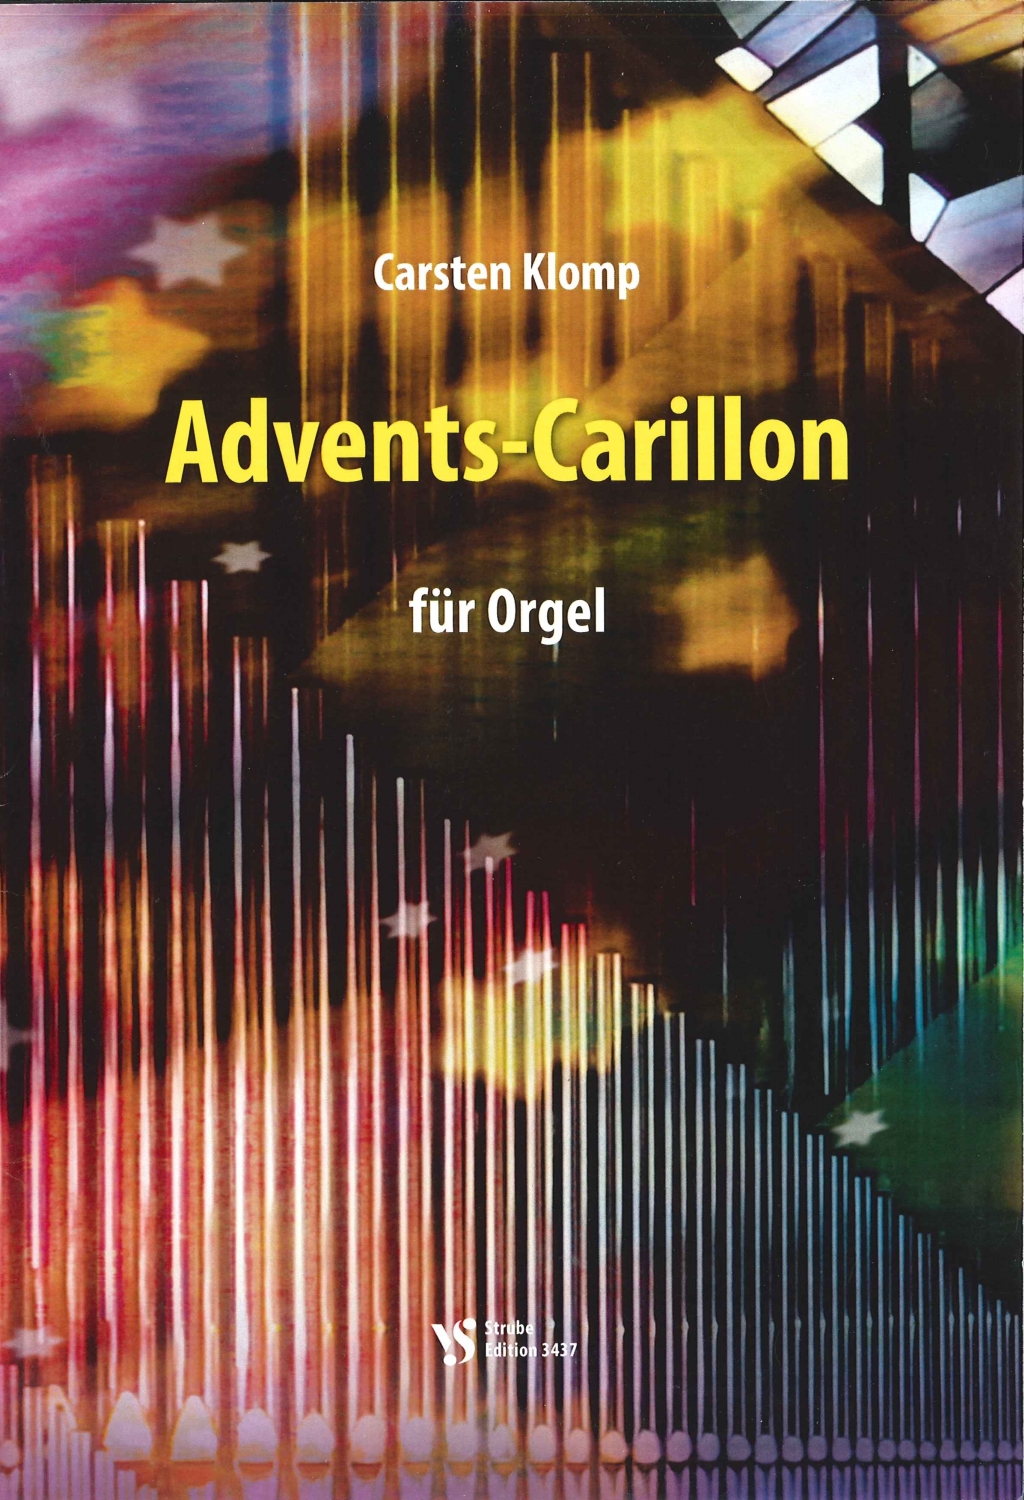 carsten-klomp-advents-carillon-org-_0001.JPG